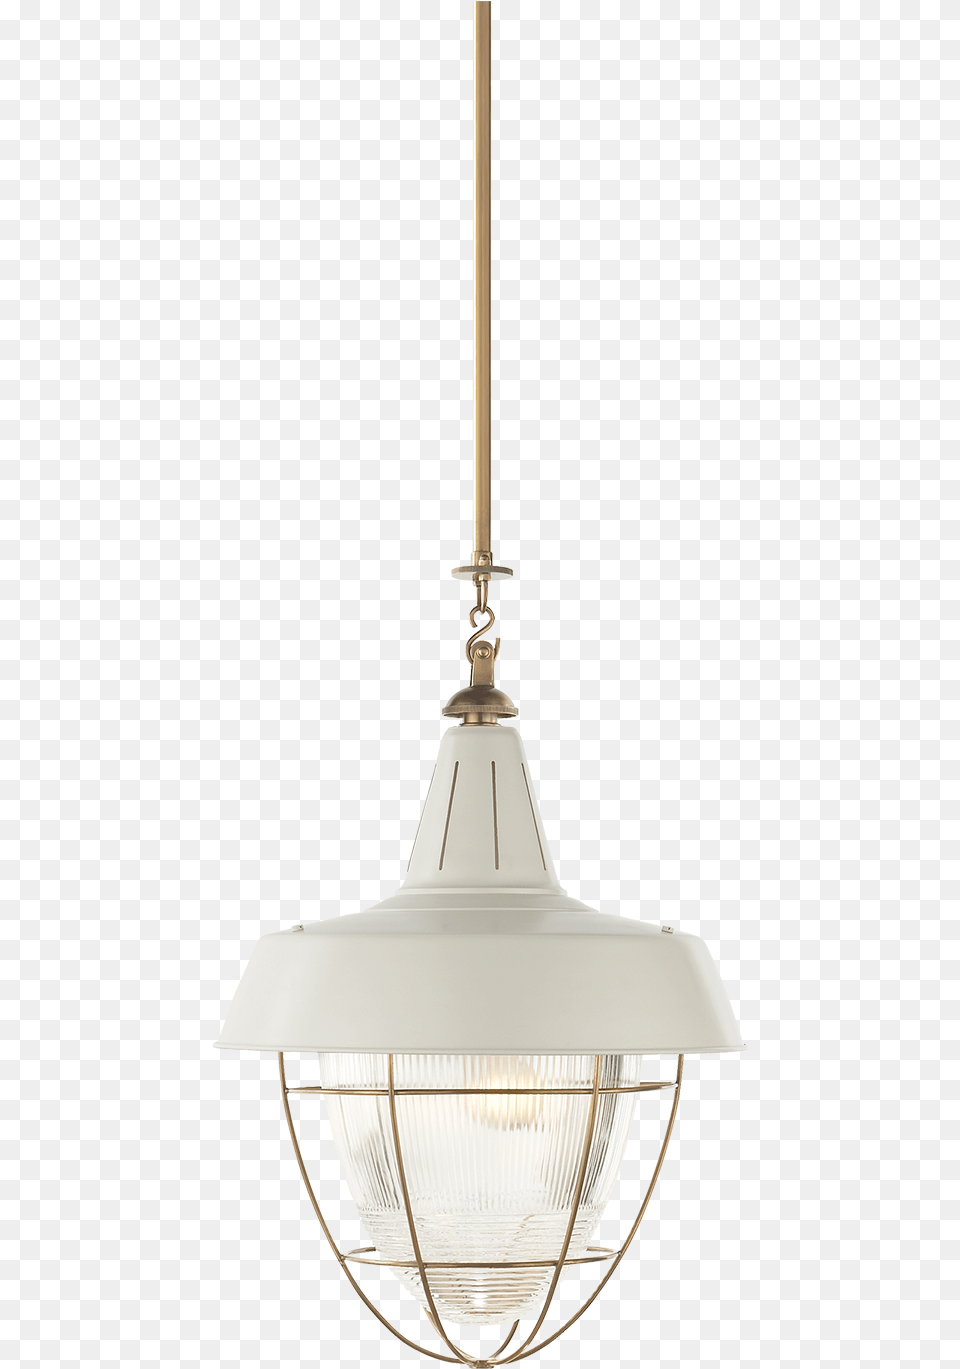 Henry Industrial Hanging Light Ceiling Fixture, Chandelier, Lamp, Light Fixture Free Png Download